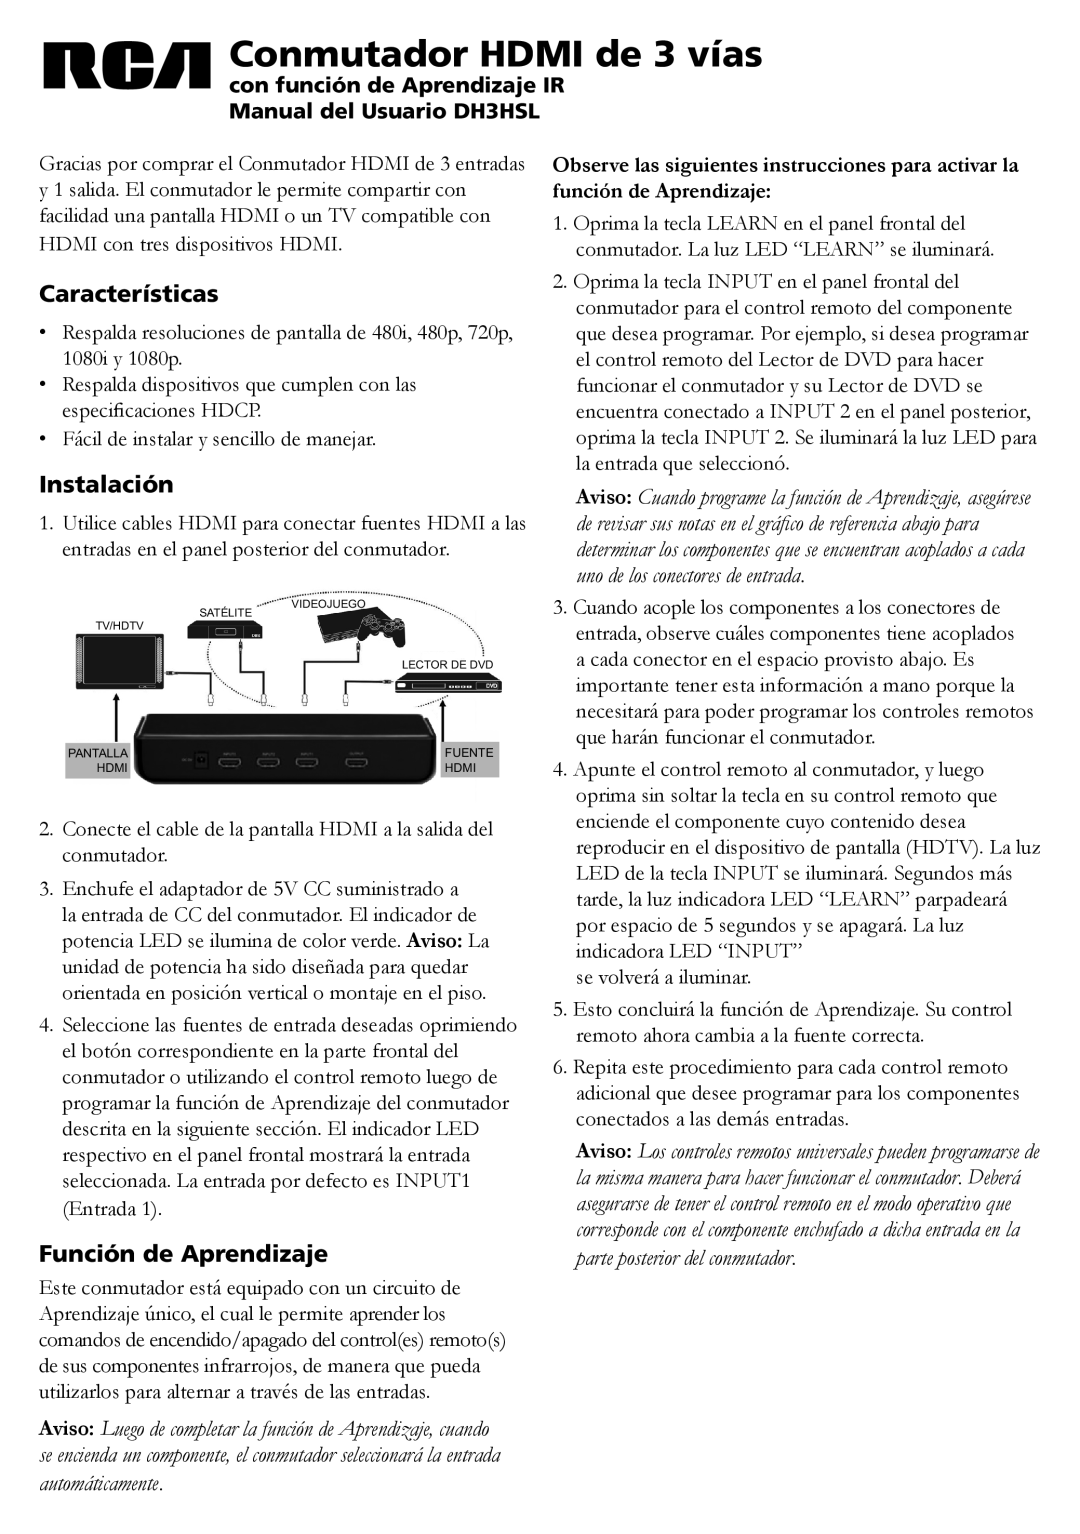 RCA DH3HSL manual Conmutador HDMI de 3 vías, Características, Instalación, Función de Aprendizaje 